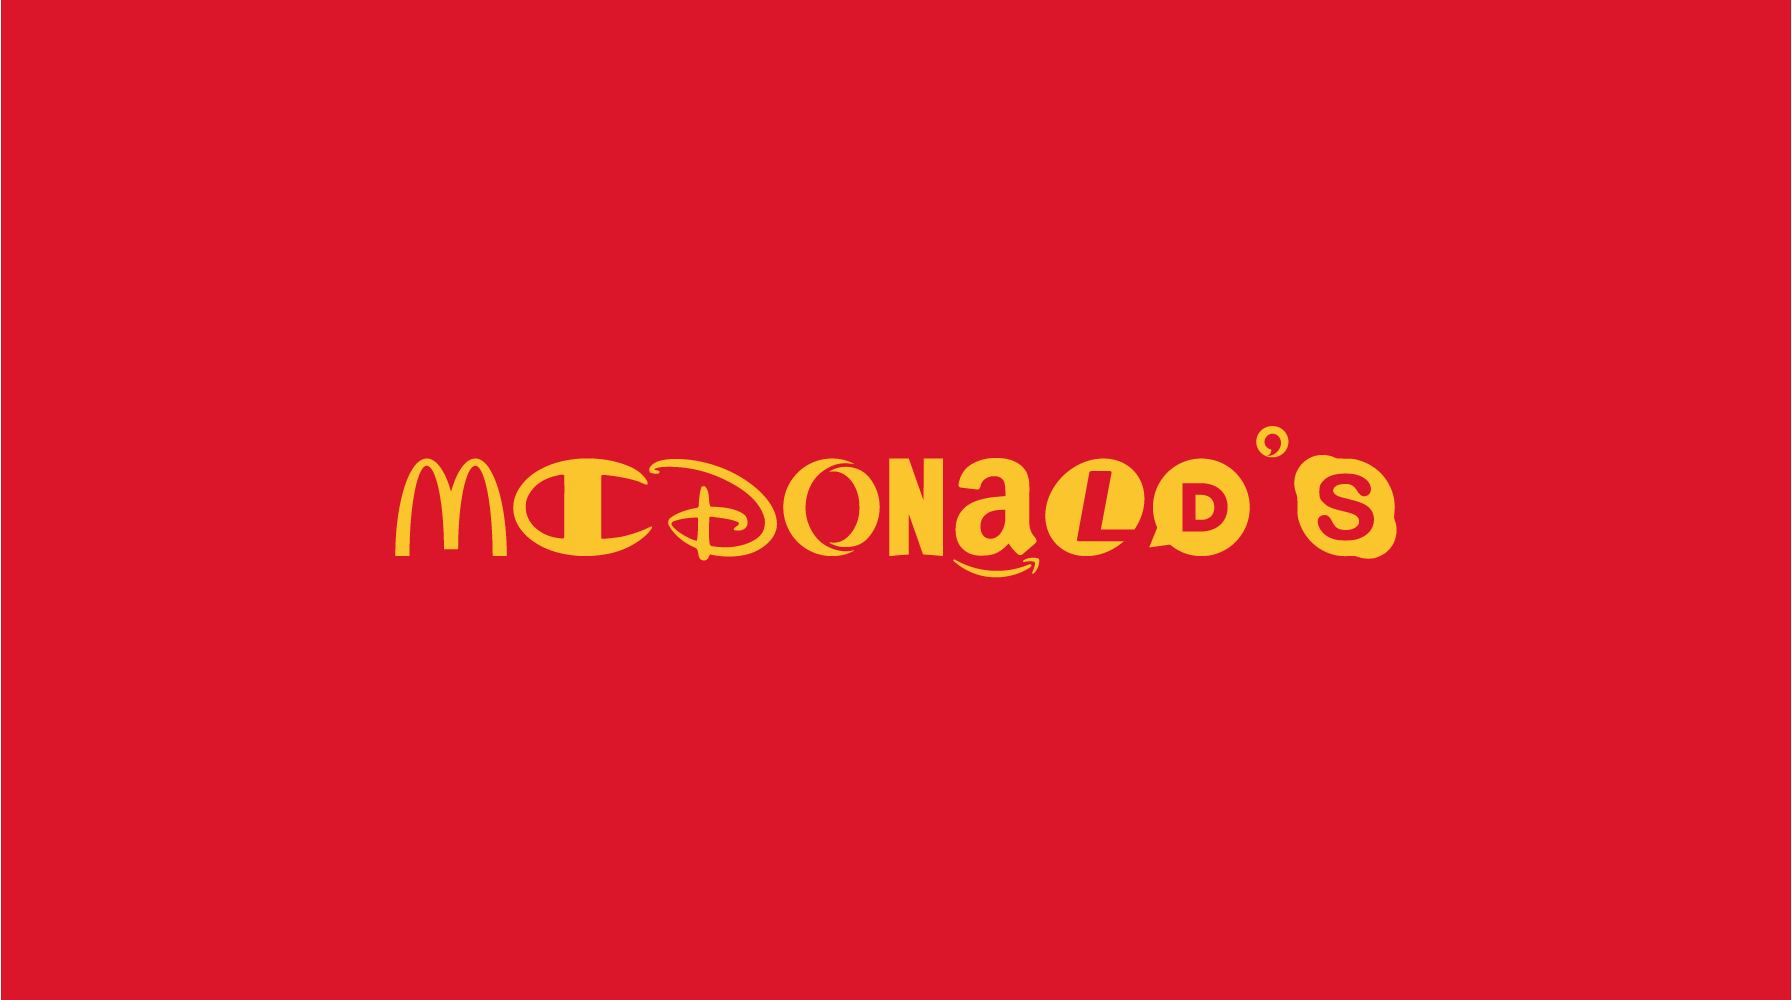 McDonald's written in Brand New Roman